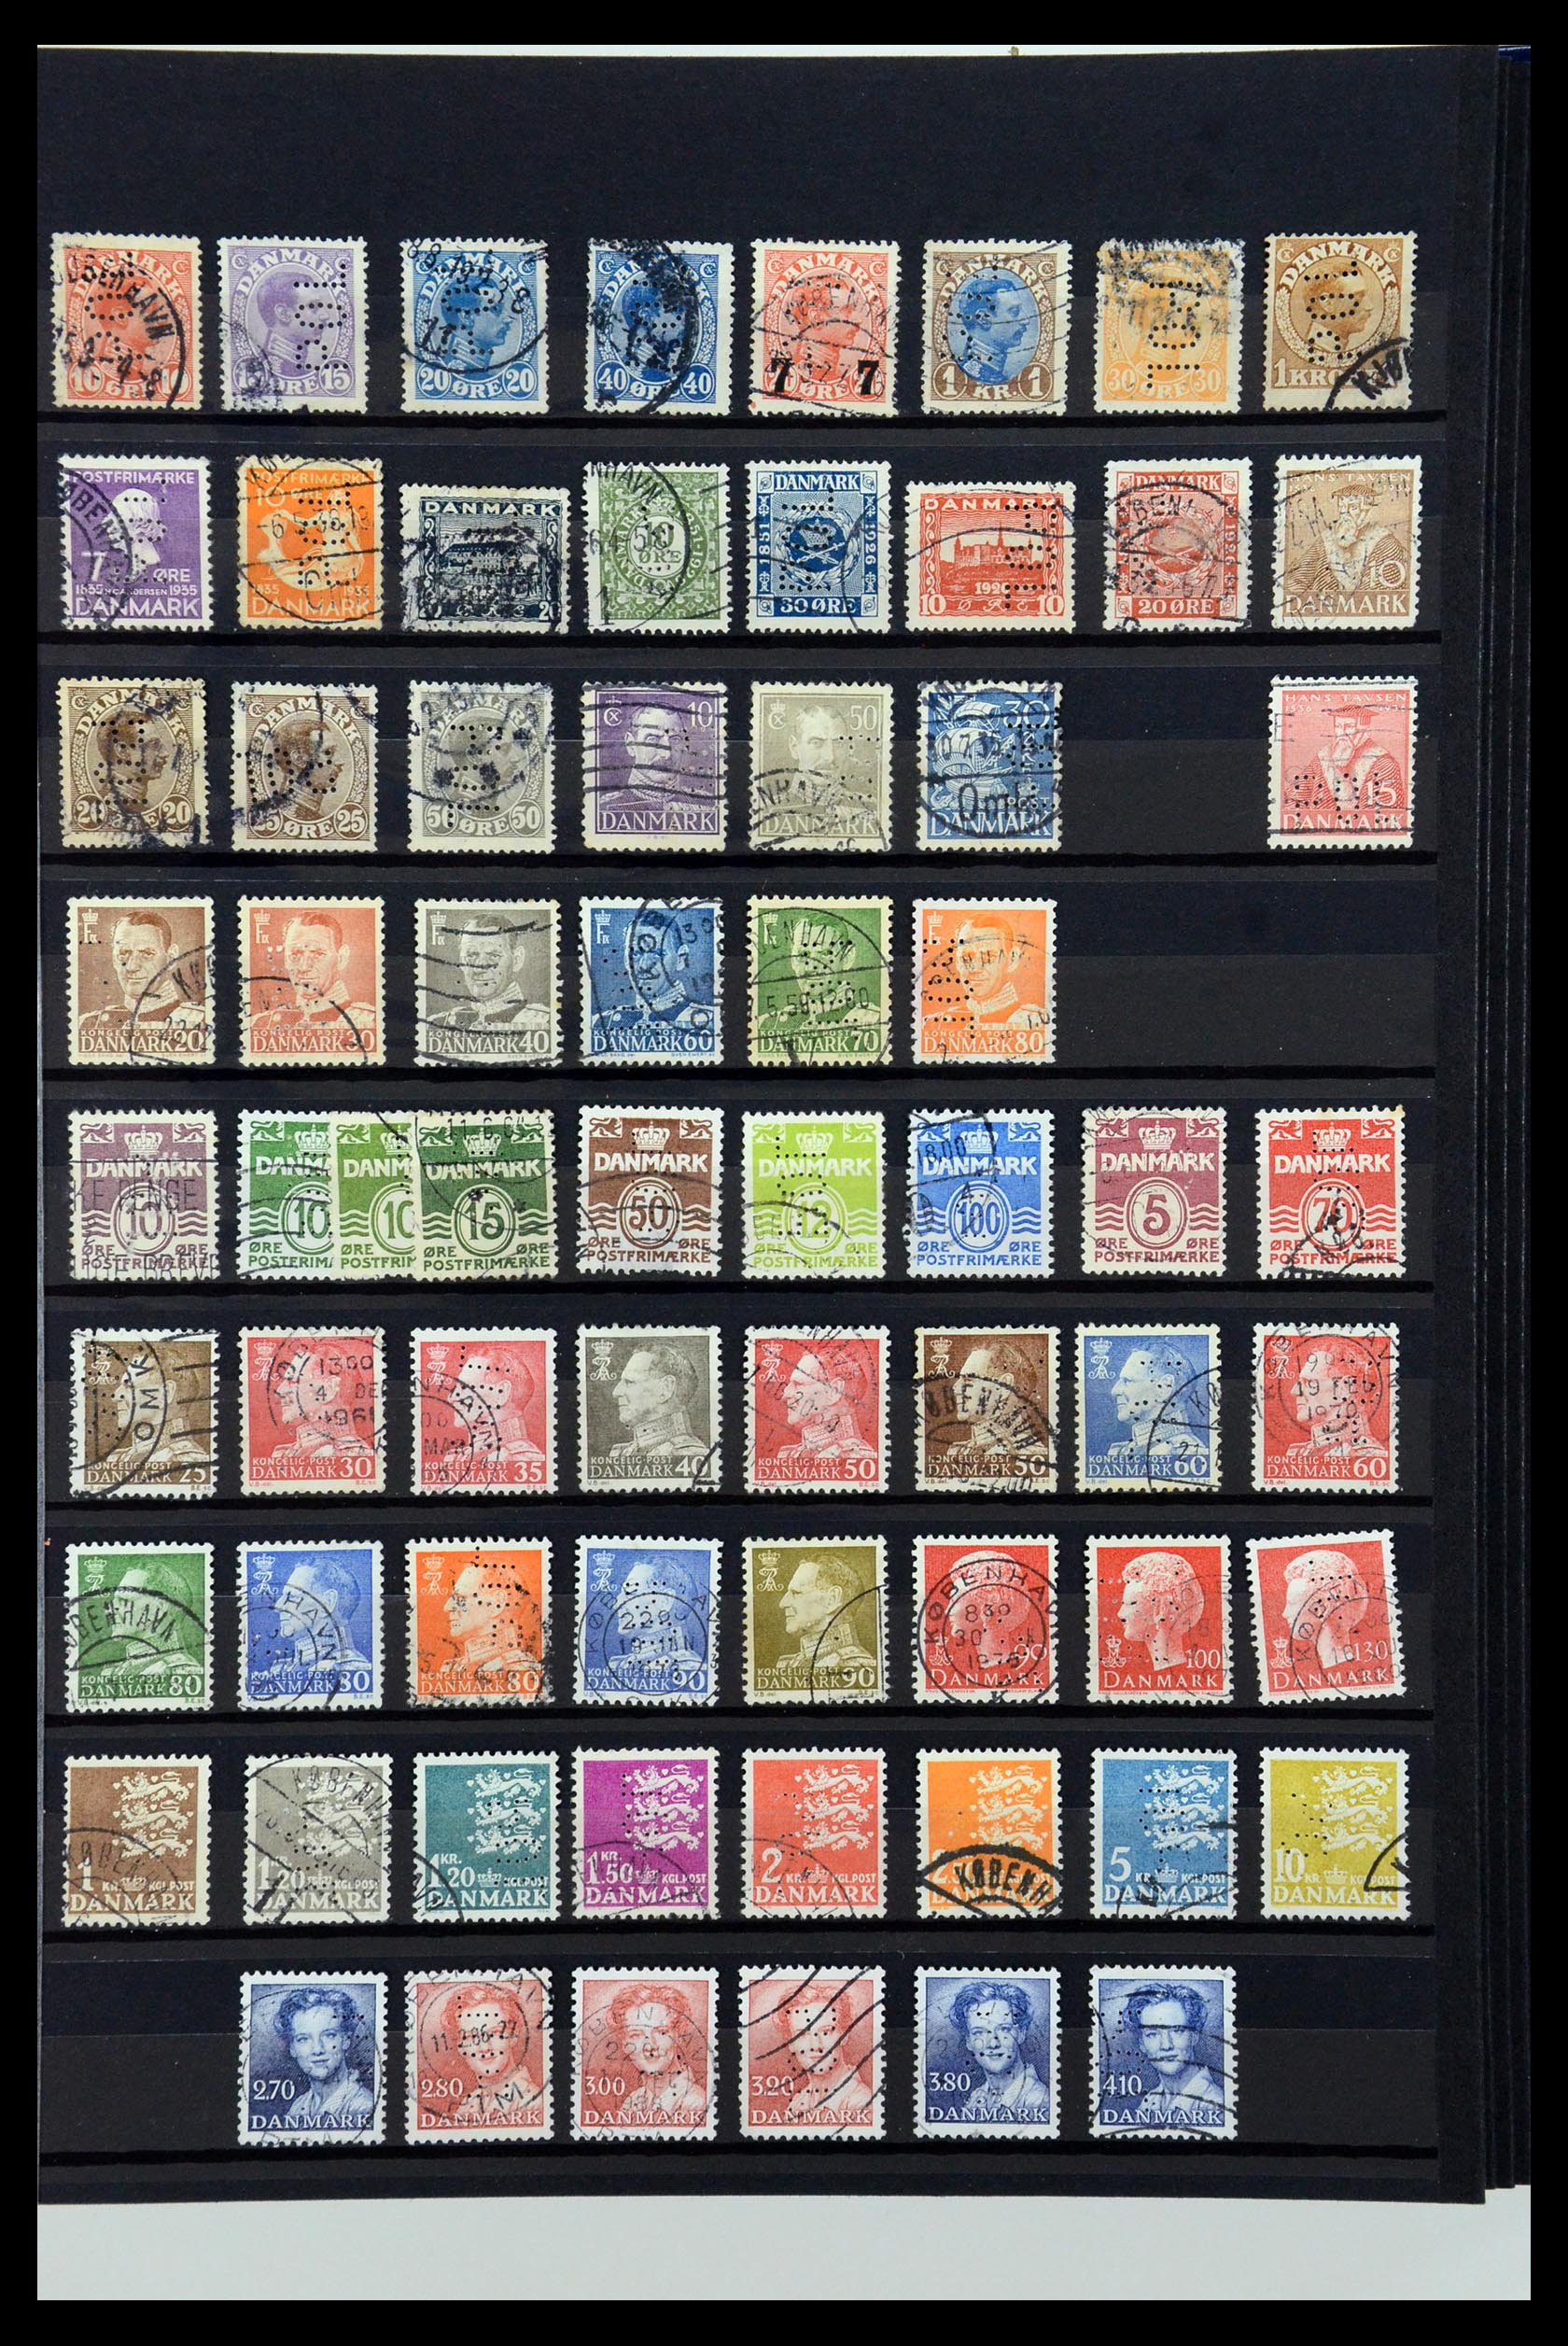 36396 196 - Stamp collection 36396 Denmark perfins.